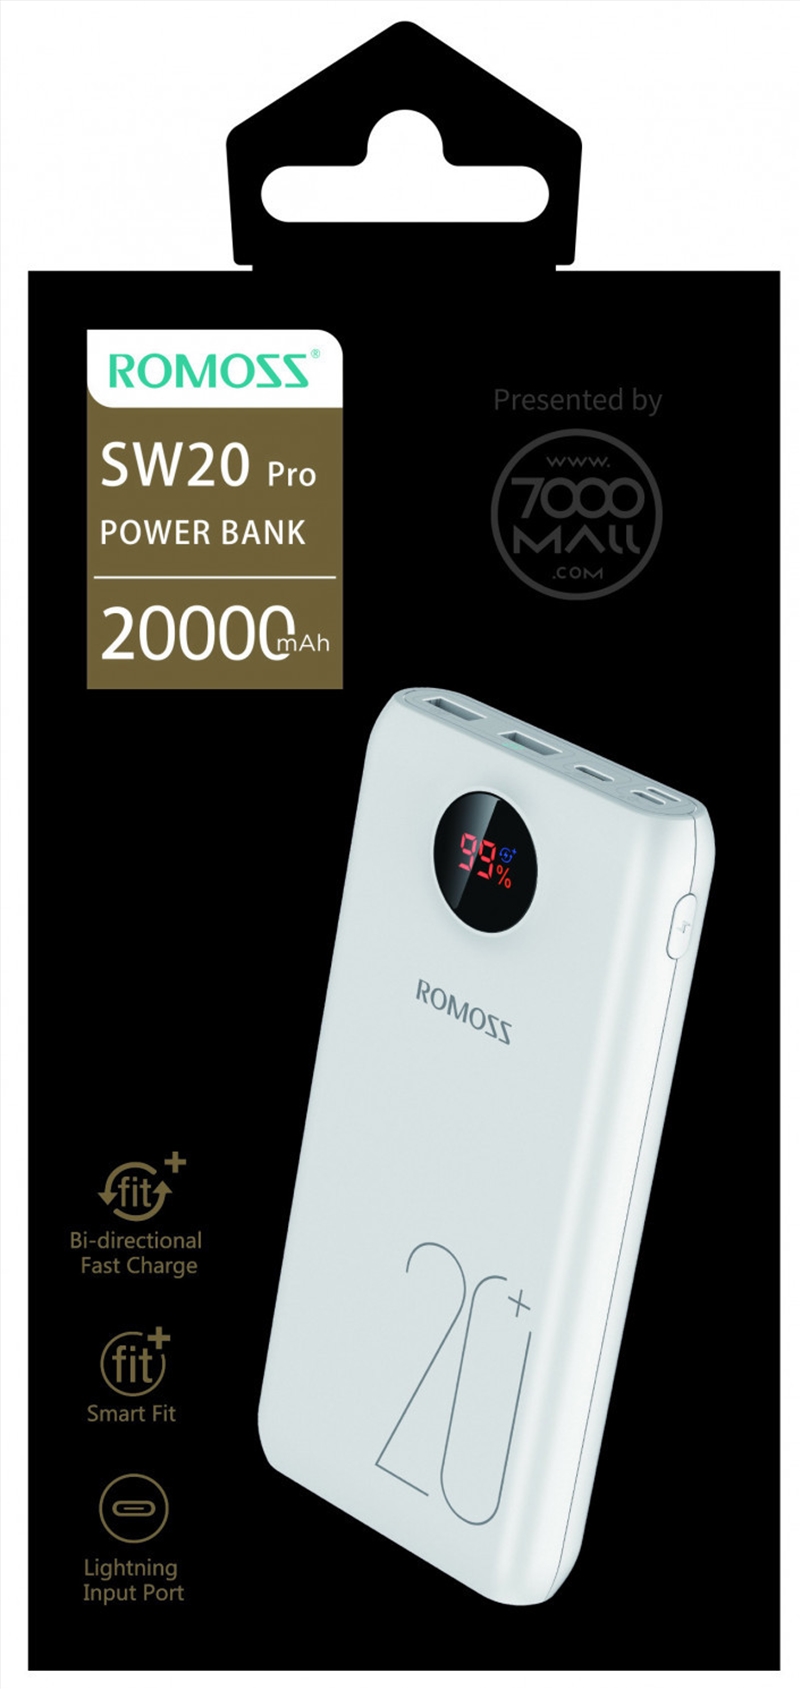 Romoss Power Bank SW20 Pro 20,000 mAh Fast Charging/Product Detail/Power Adaptors